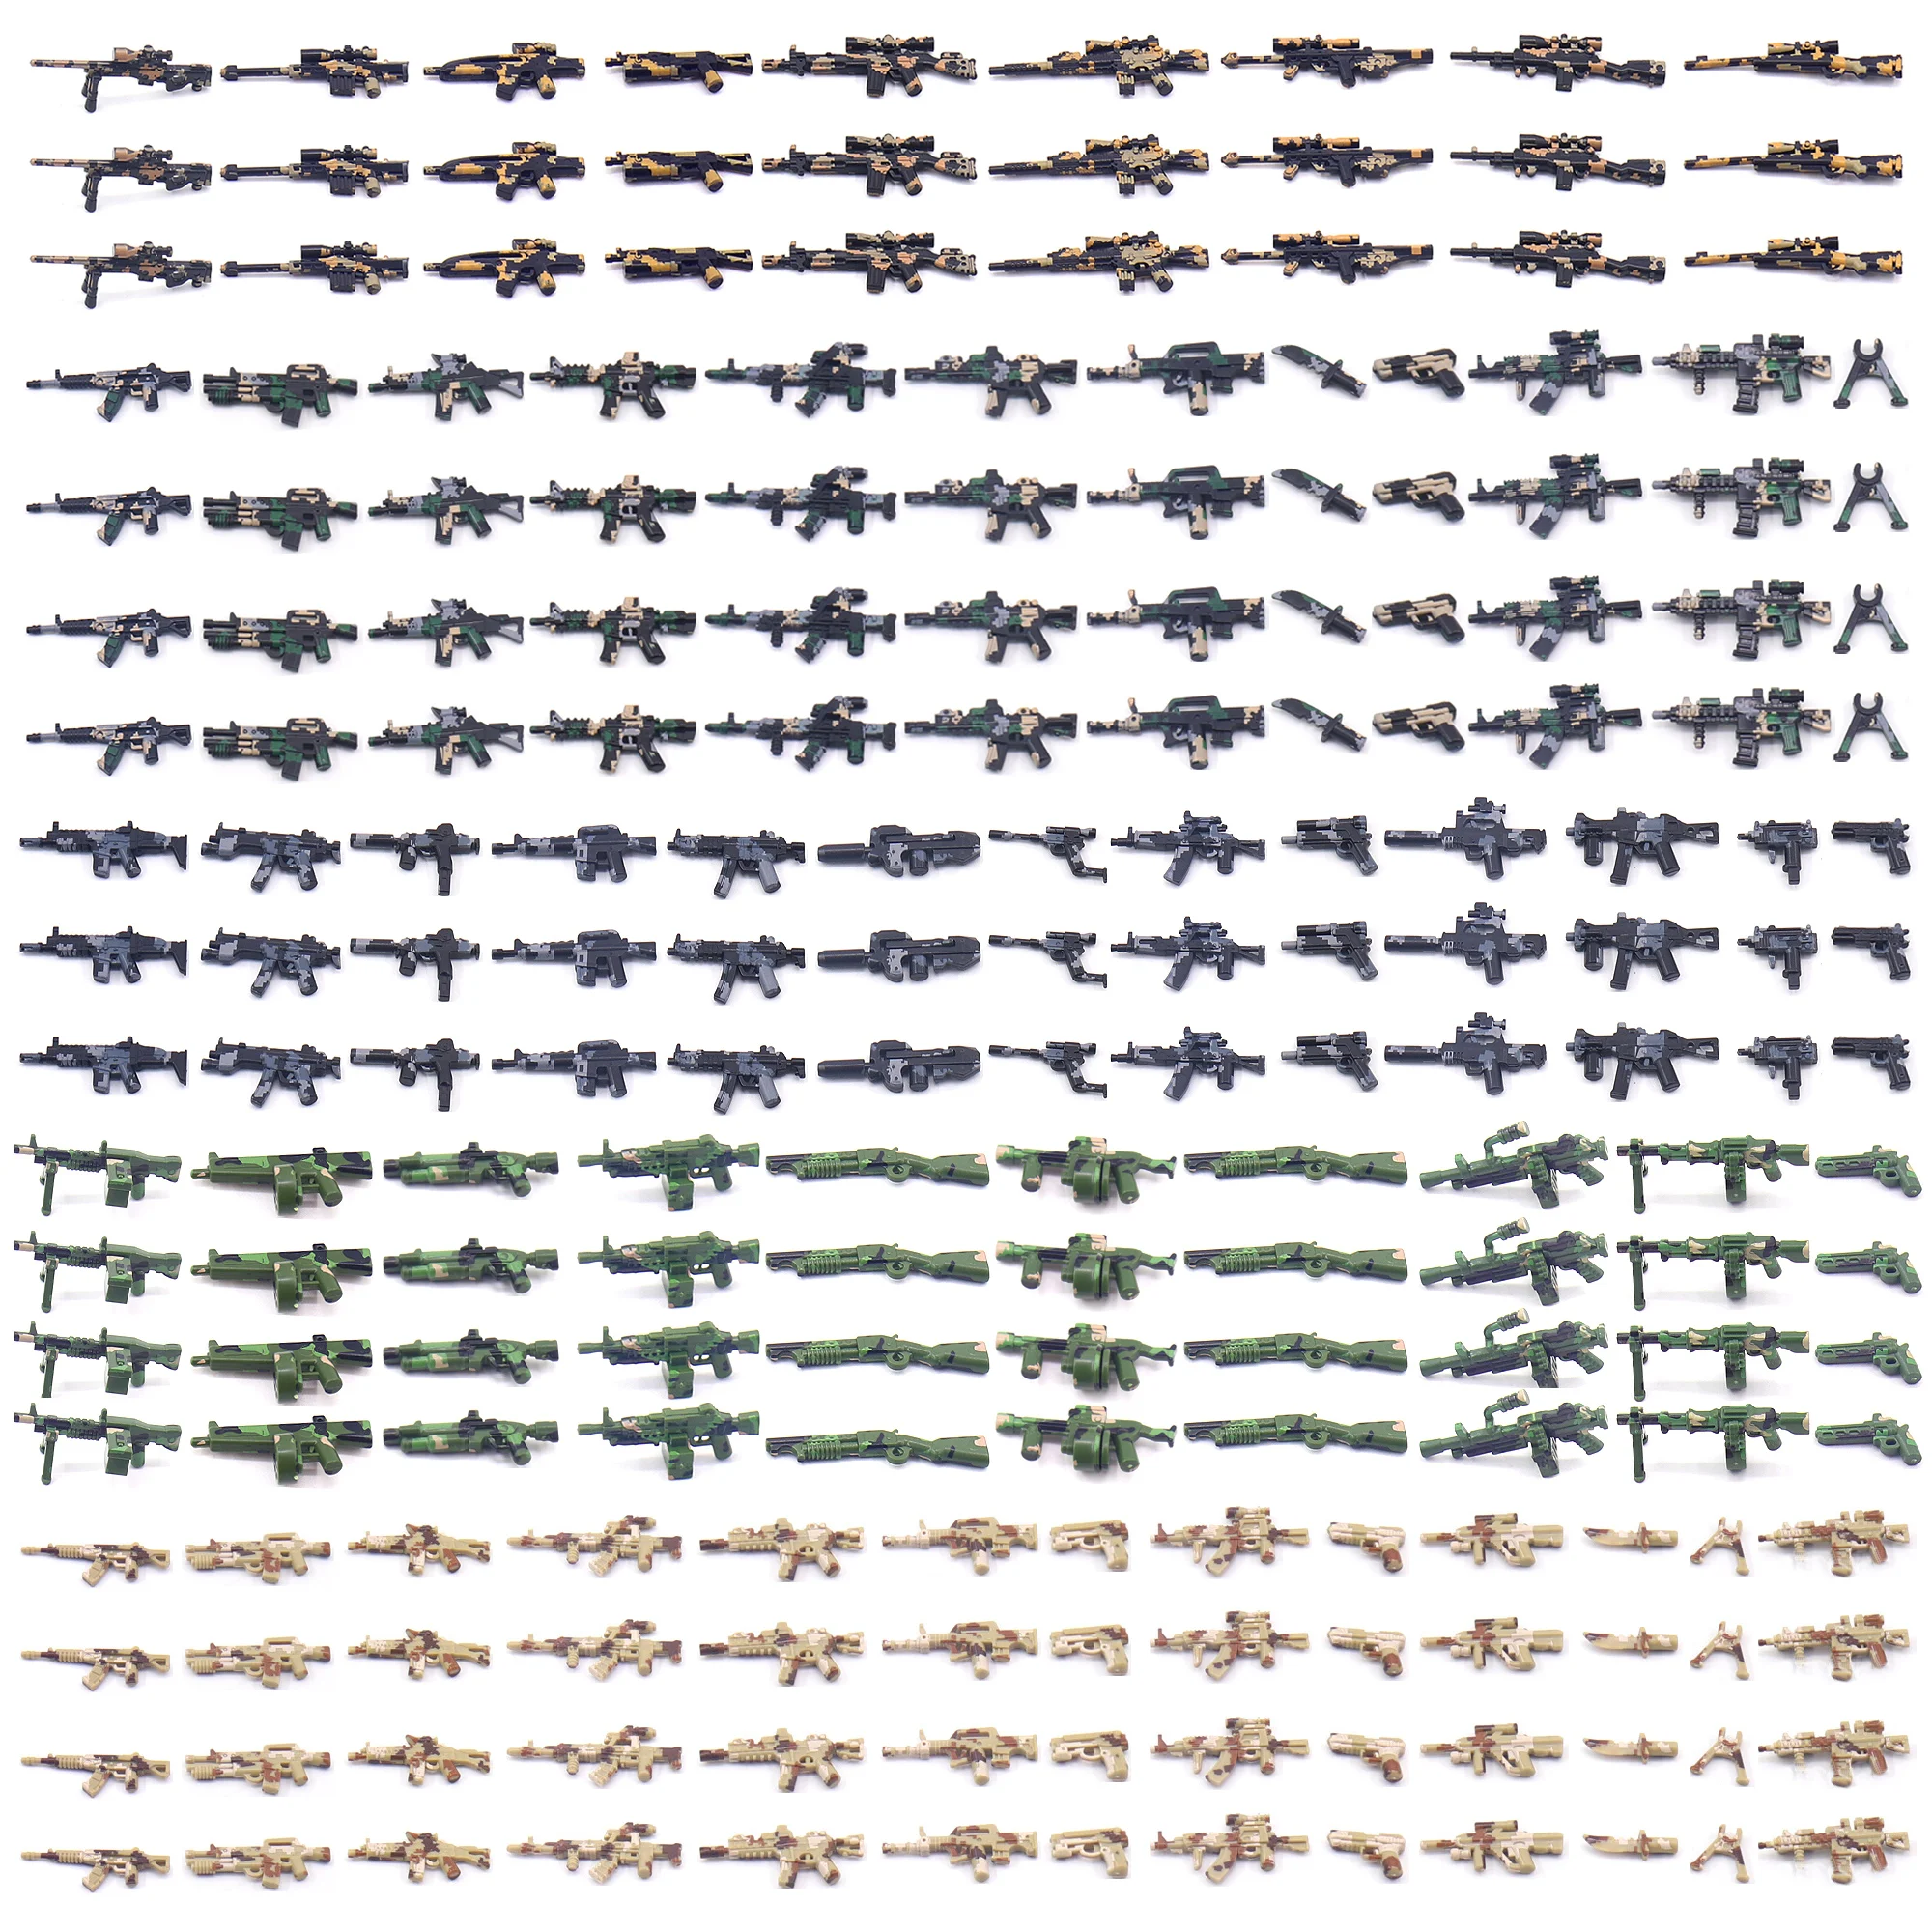 Pilt /104278/Kamuflaaž-relva-sõjalise-relva-pack-komplekt-swat-1_share/upload.jpeg